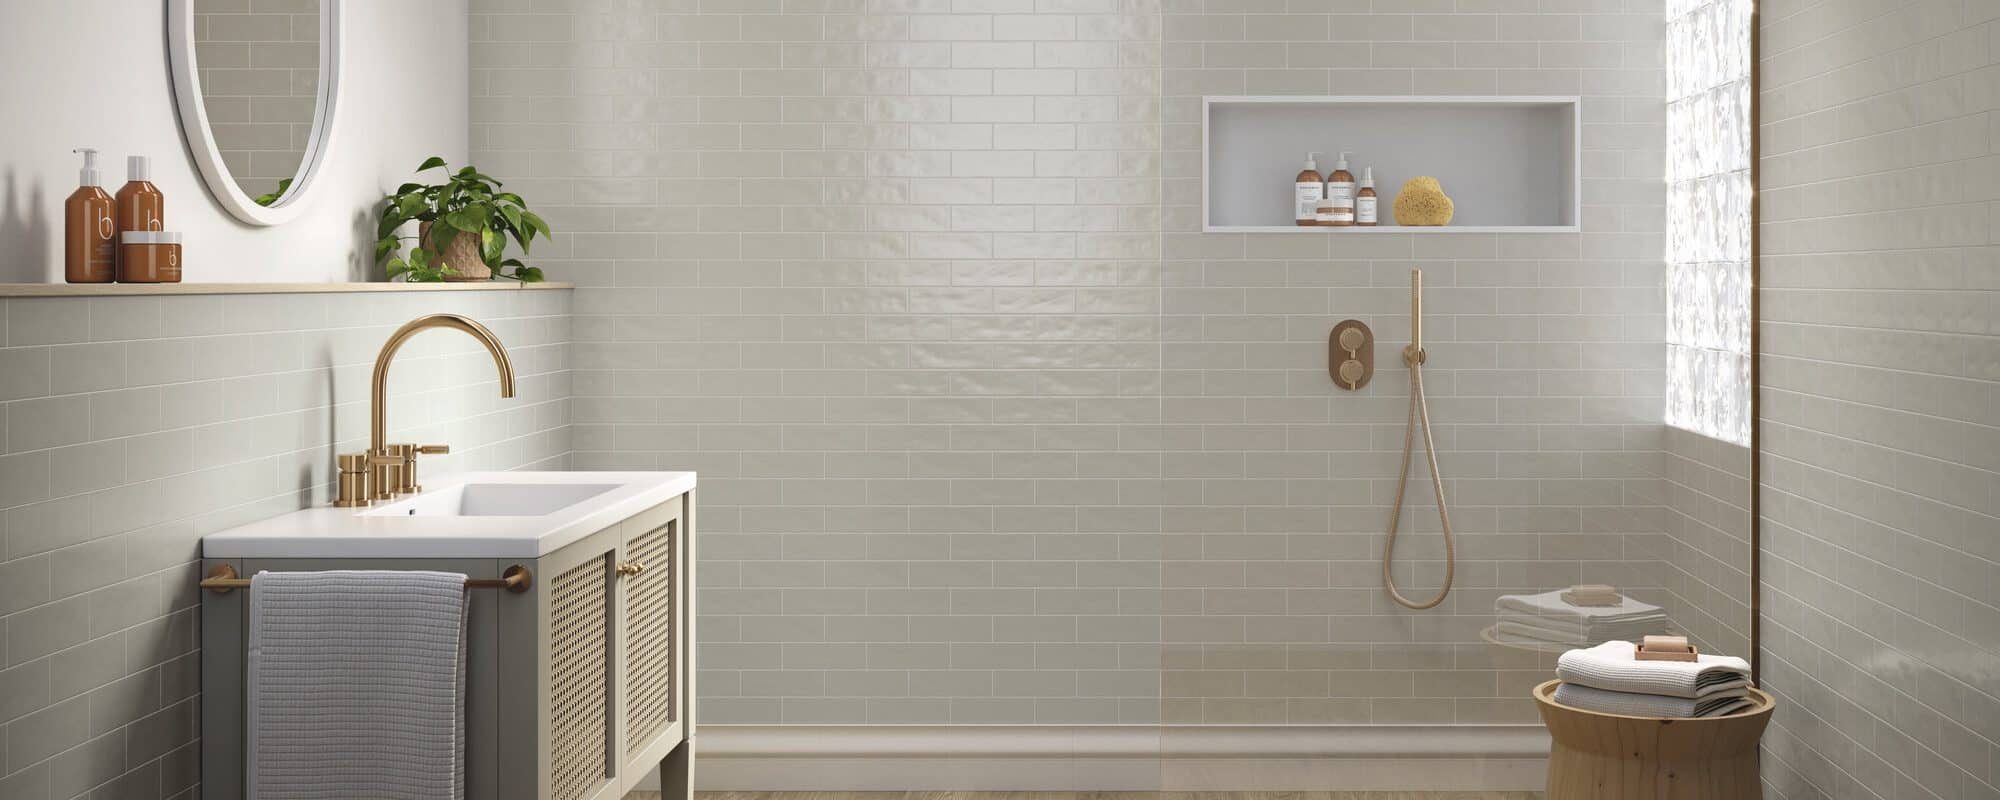 FABLES Effect Wall & Floor Tiles for Bathrooms uk slider